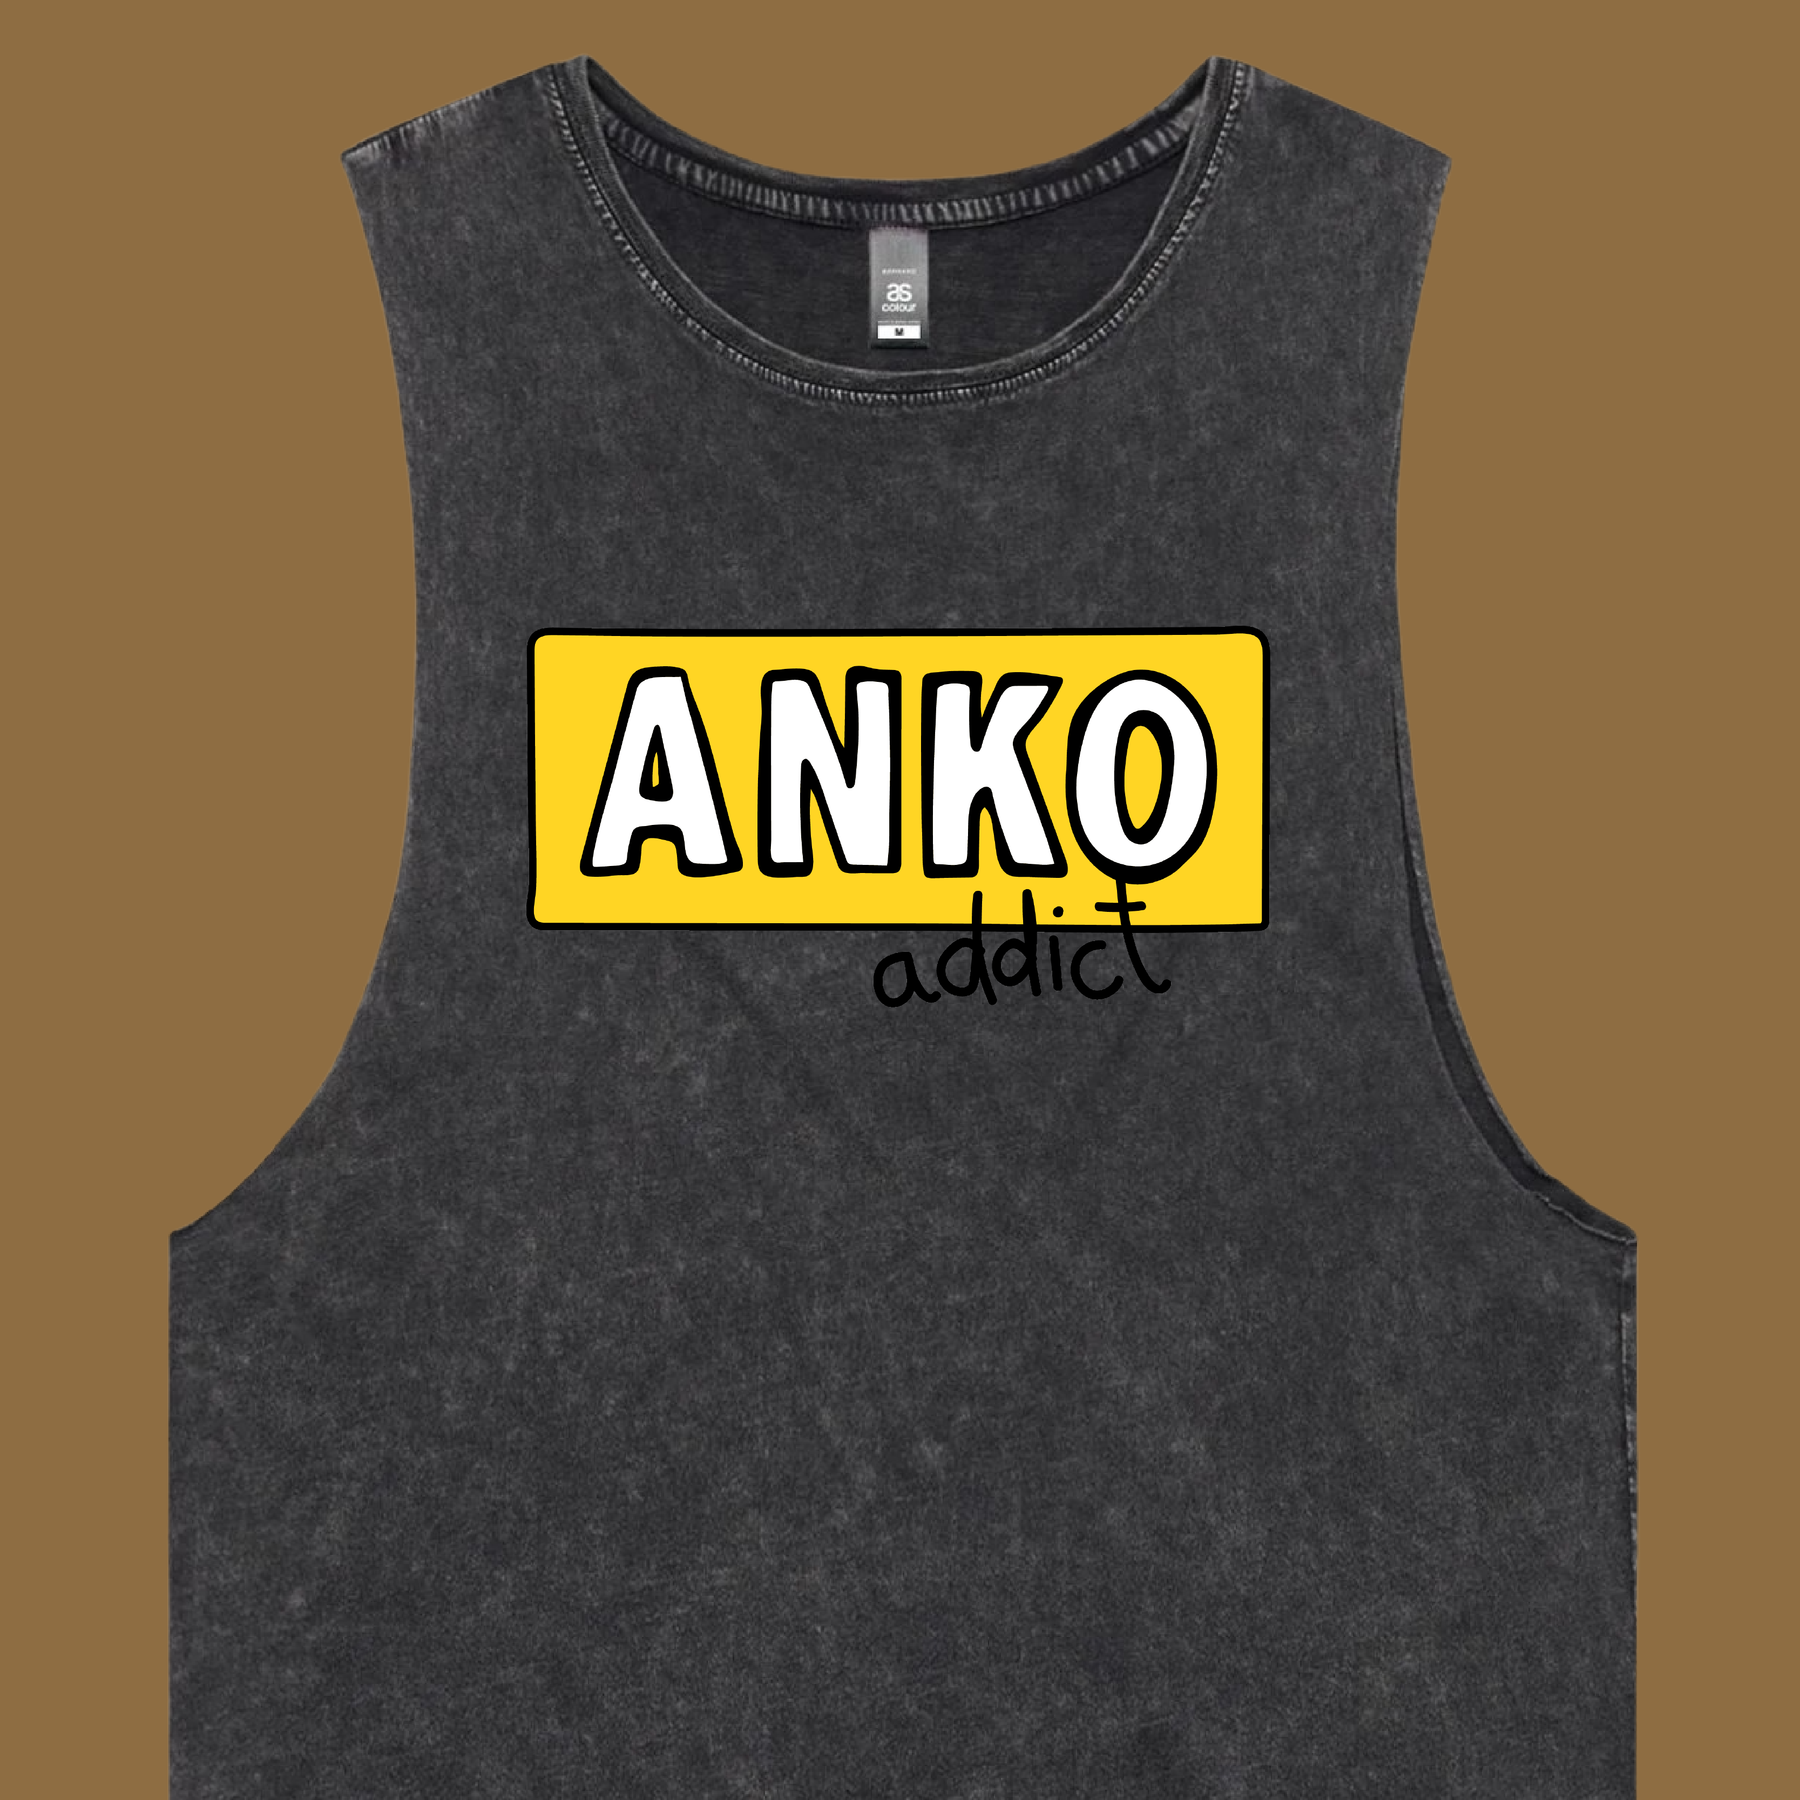 ANKO Addict 💉 - Tank